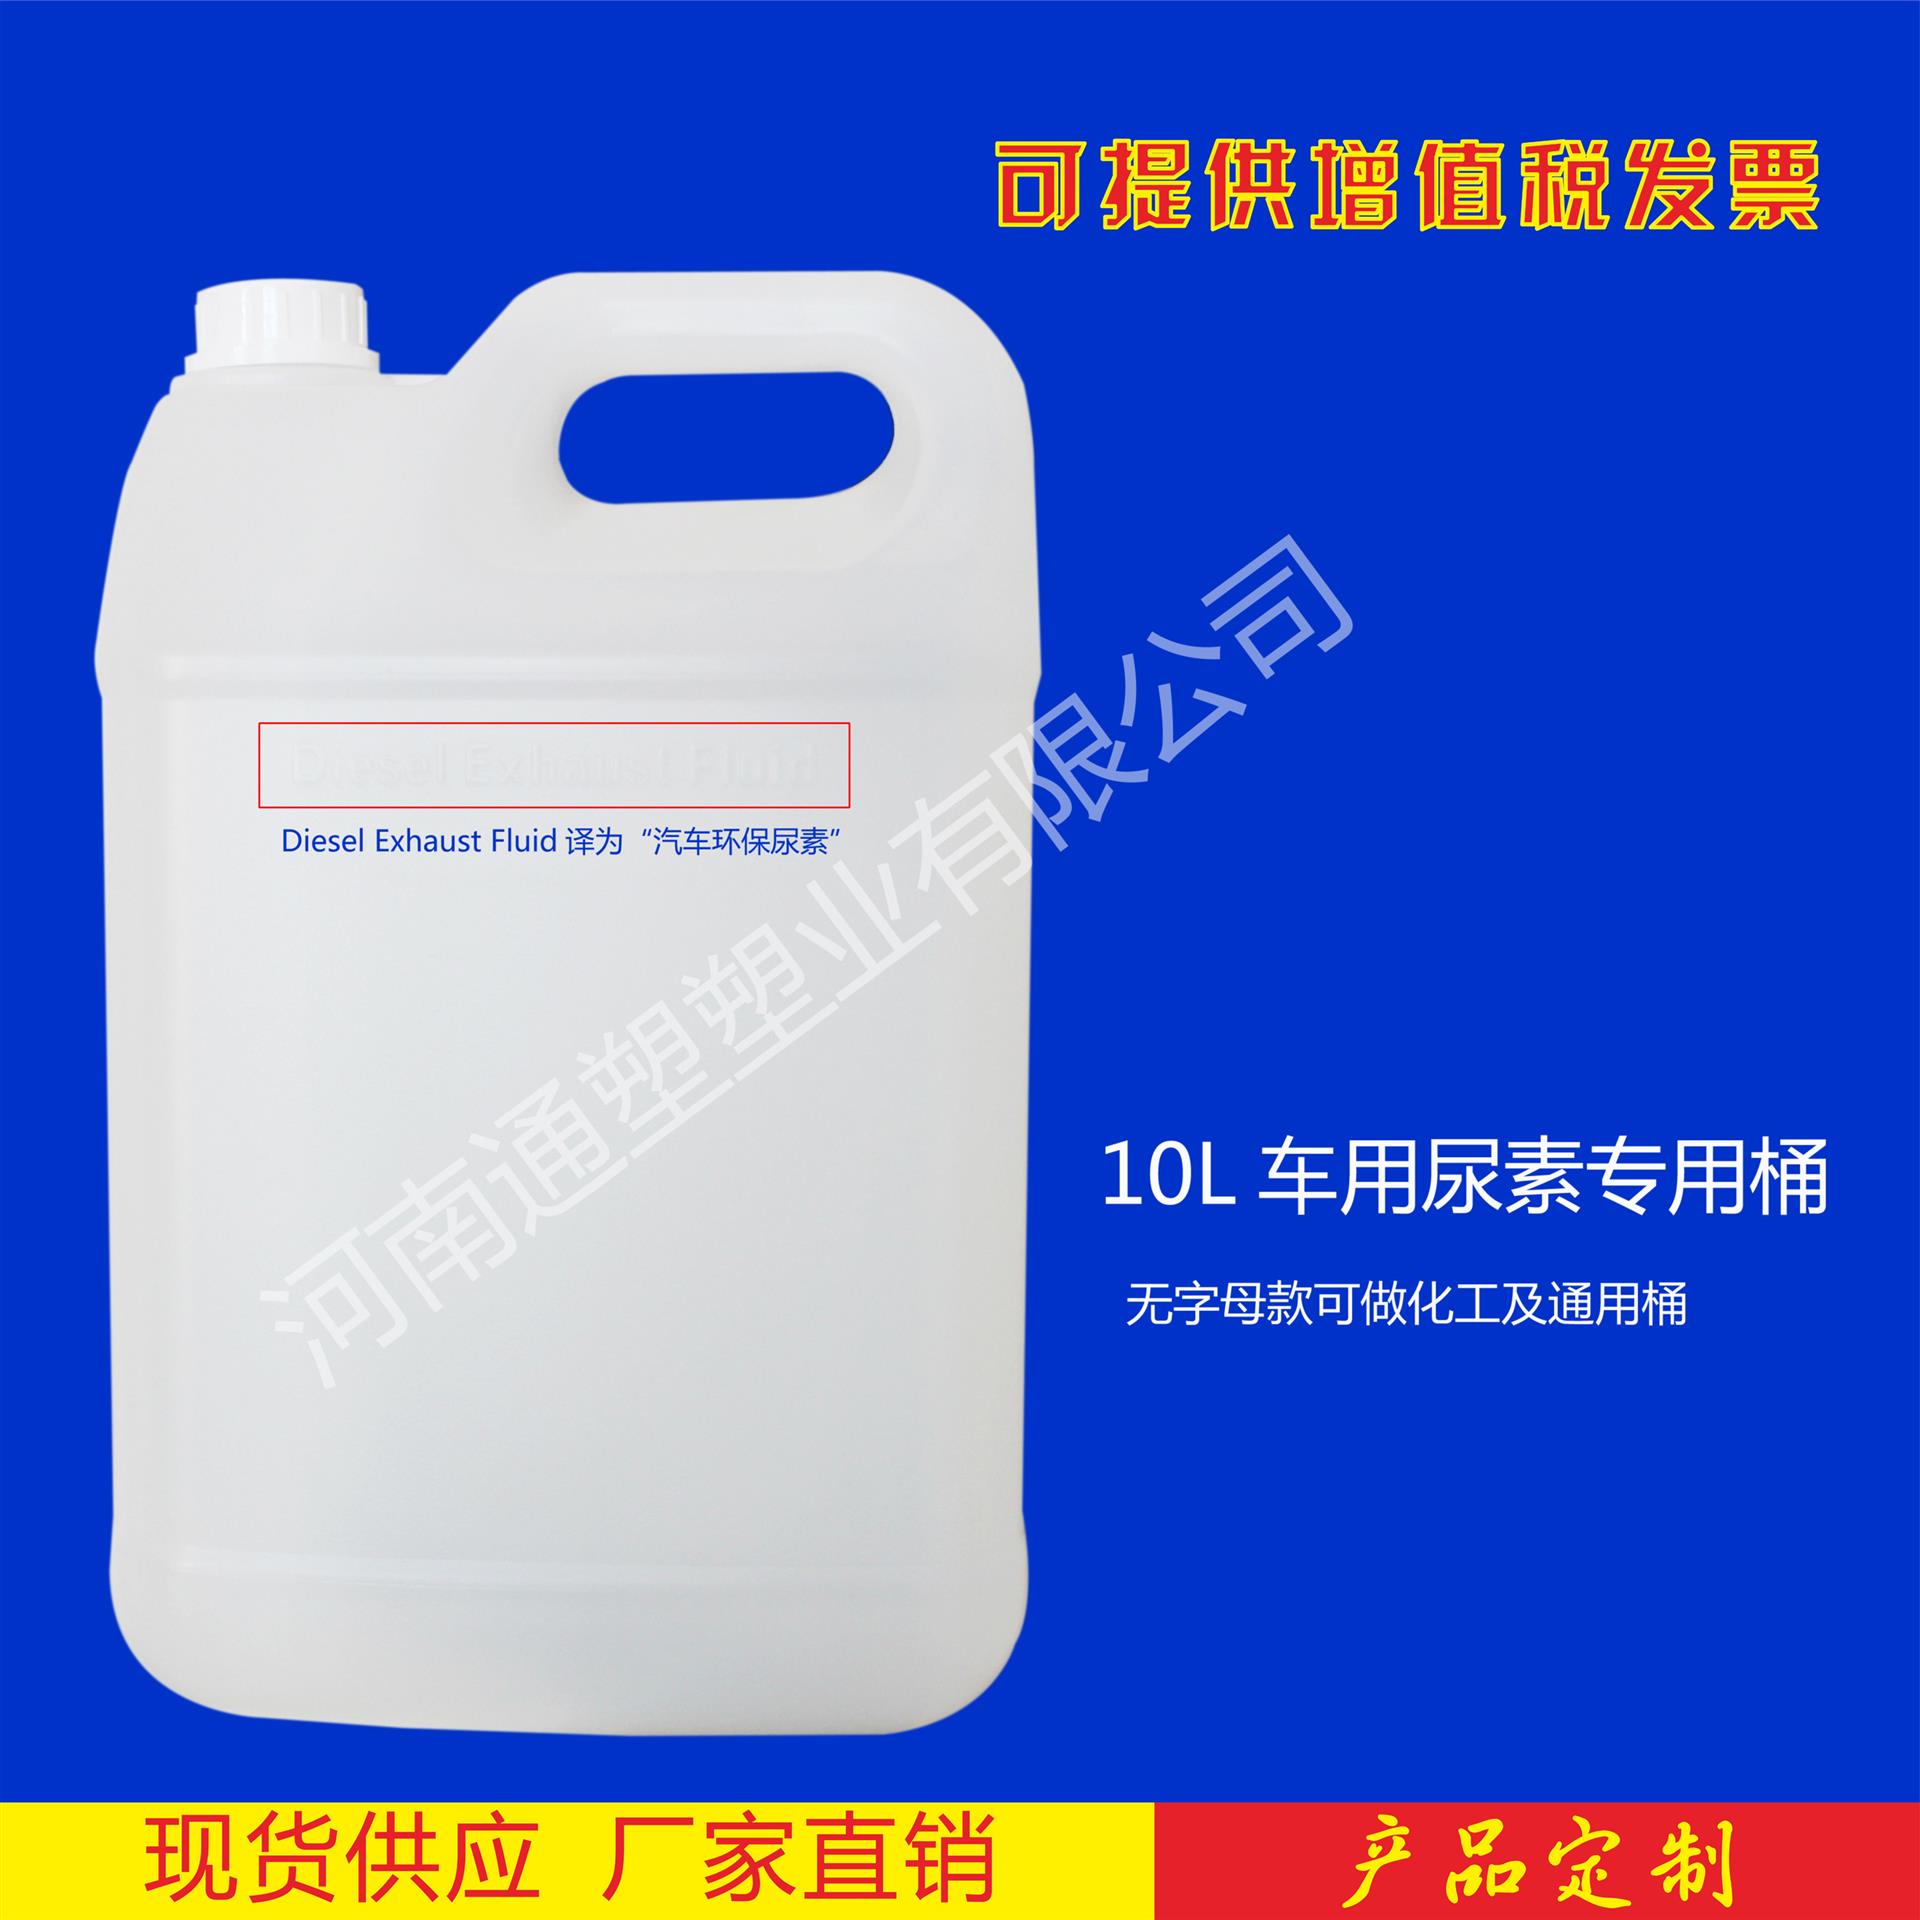 10l尿素桶10公斤车用尿素桶化工桶10l塑料桶尿素溶液桶厂家直销